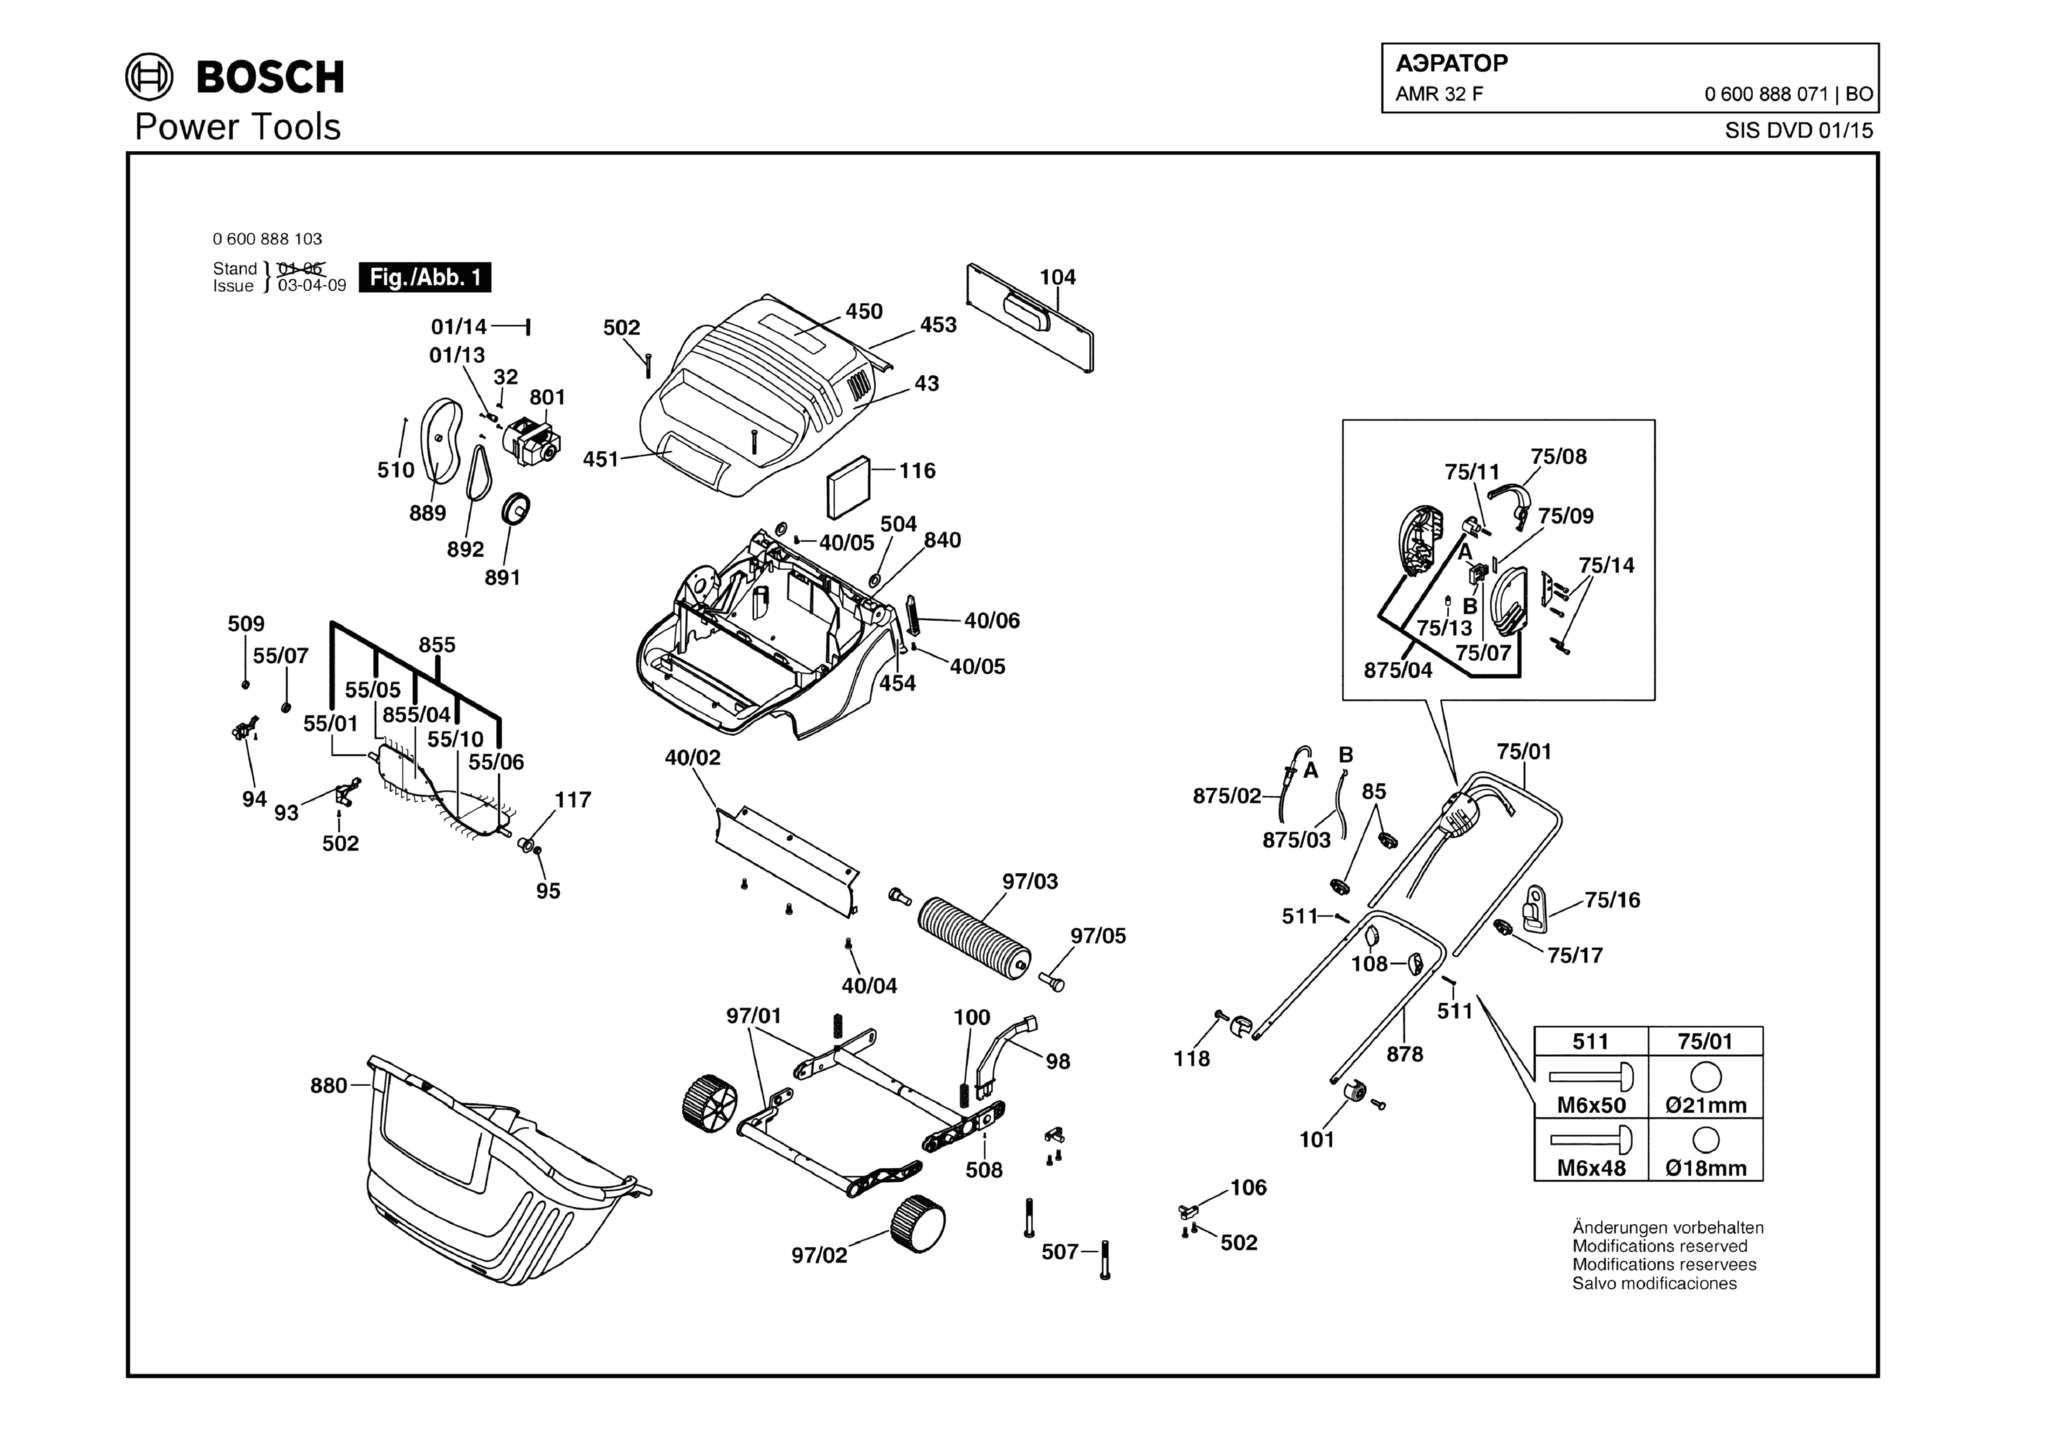 Запчасти, схема и деталировка Bosch AMR 32 F (ТИП 0600888071)